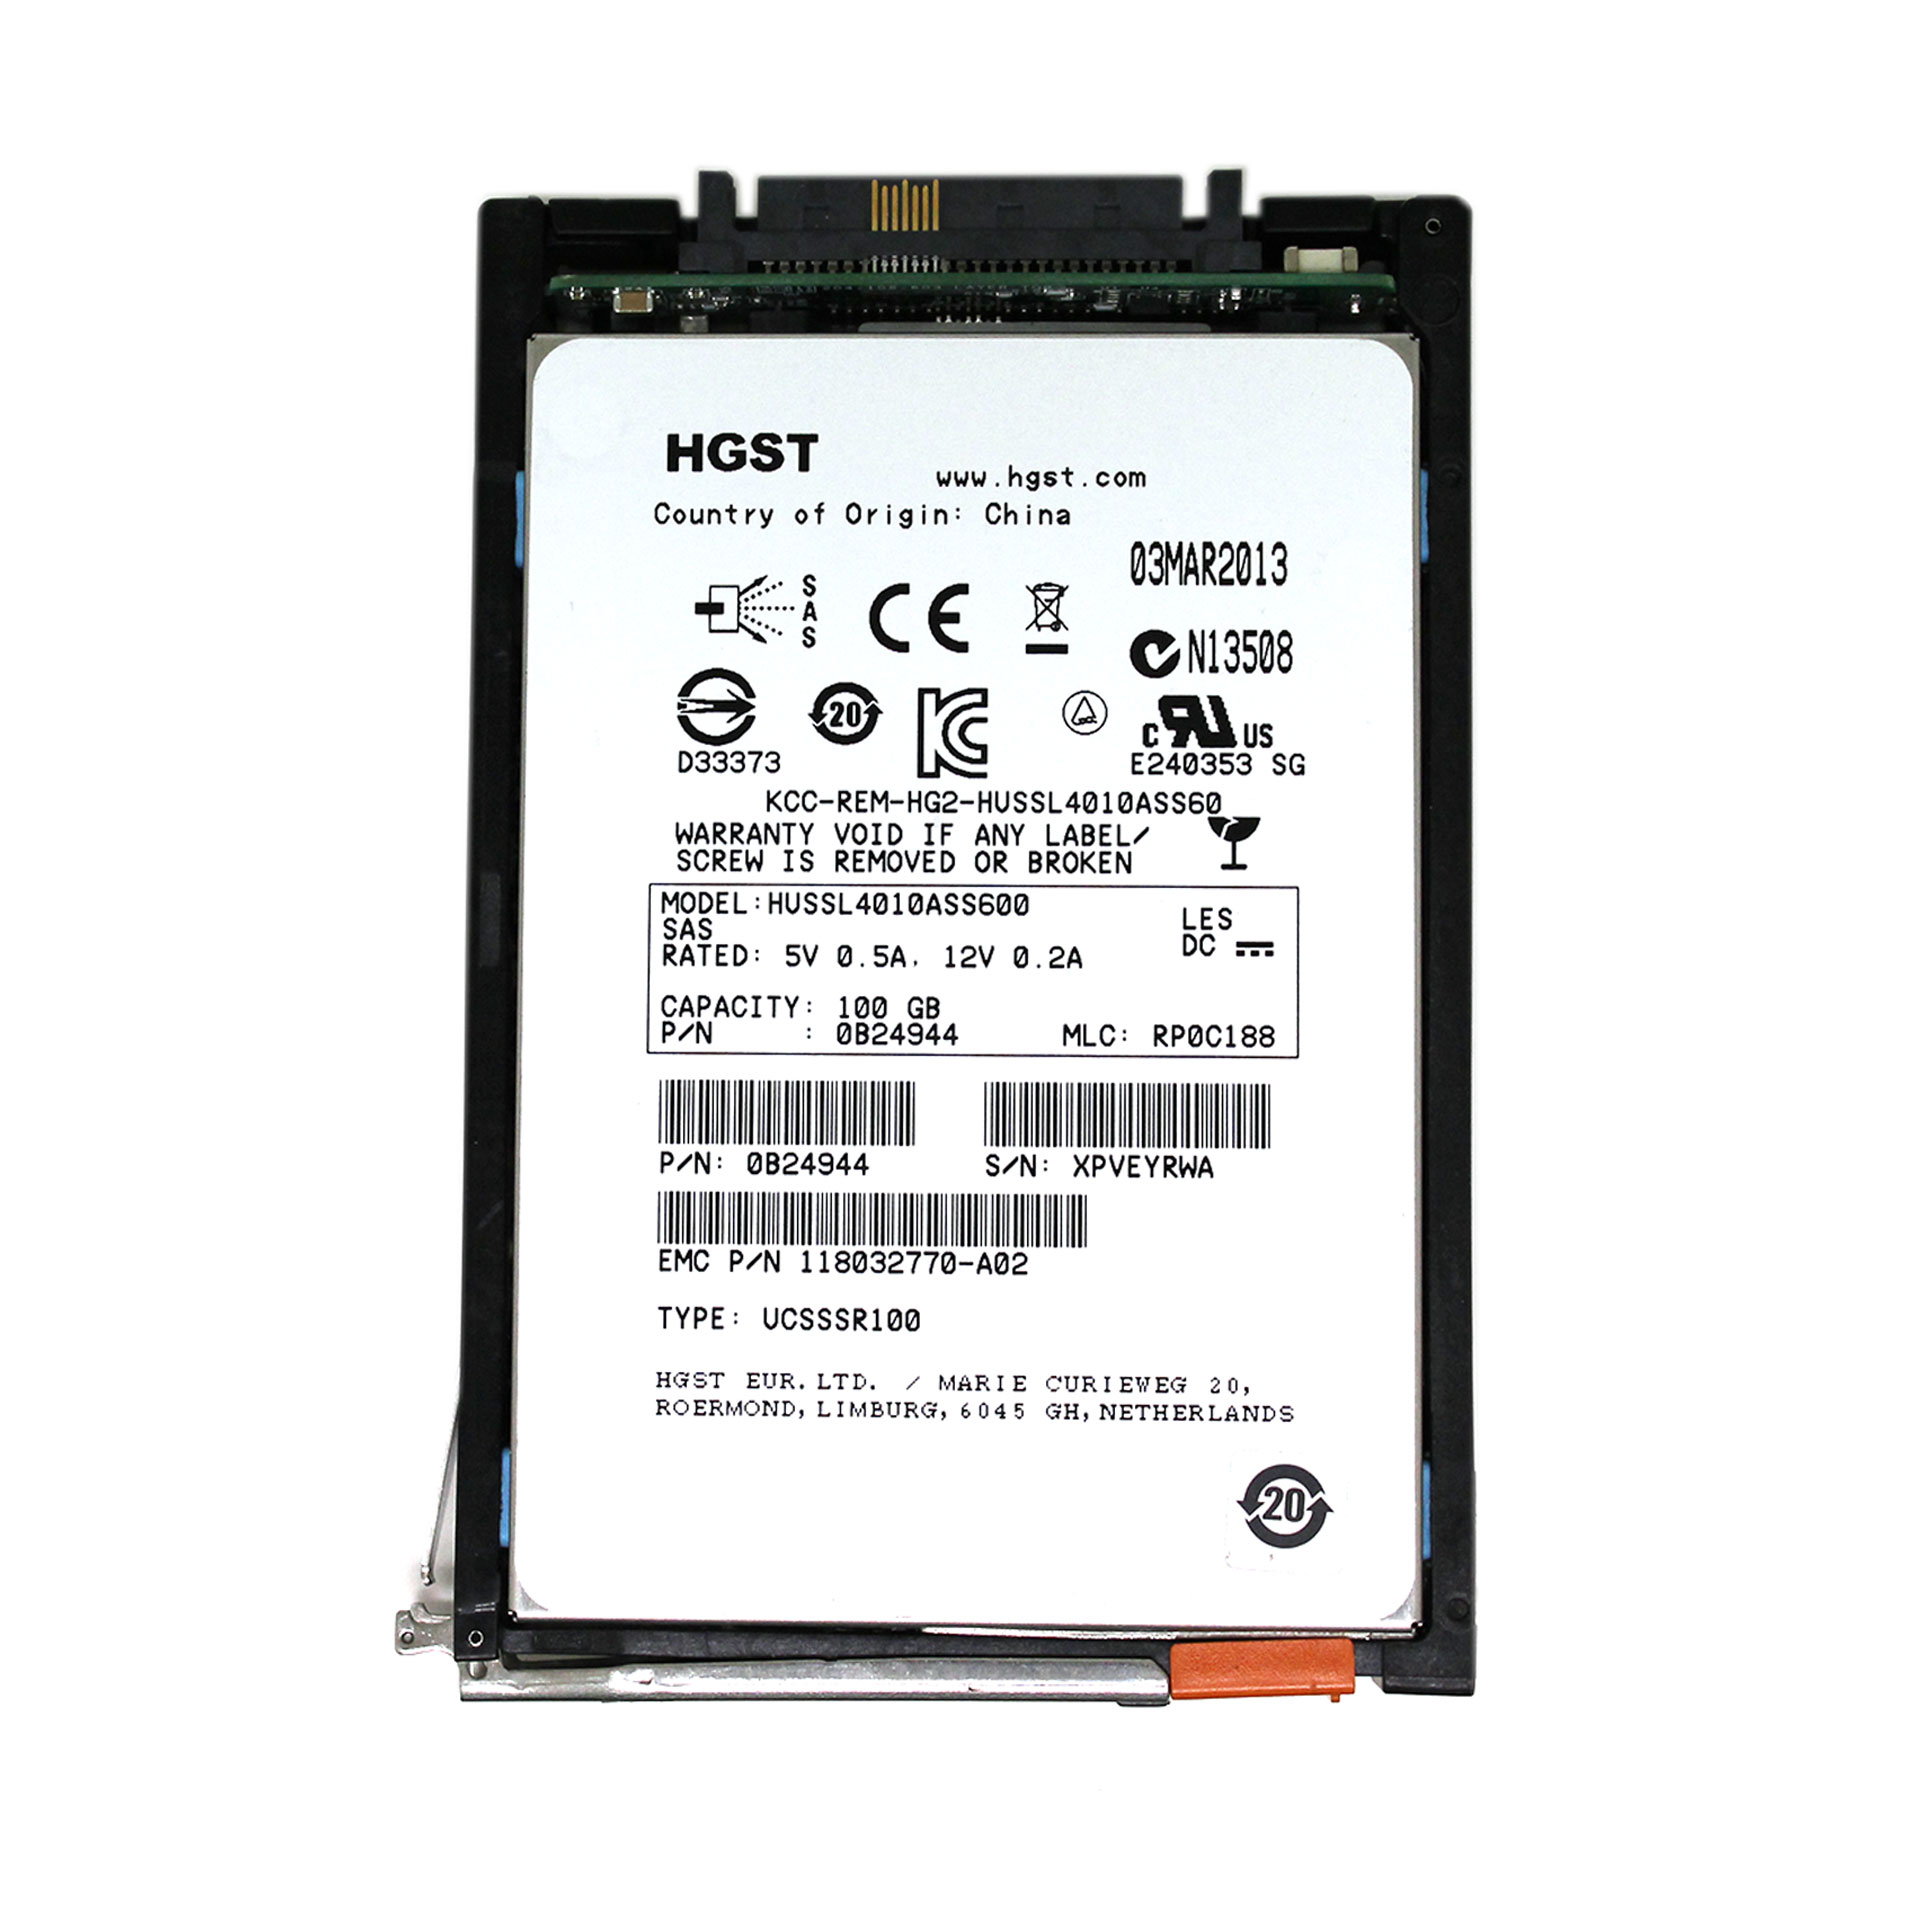 HITACHI EMC HUSSL4010ASS600 100GB SAS 2.5" SSD 0B24944 4M8GM